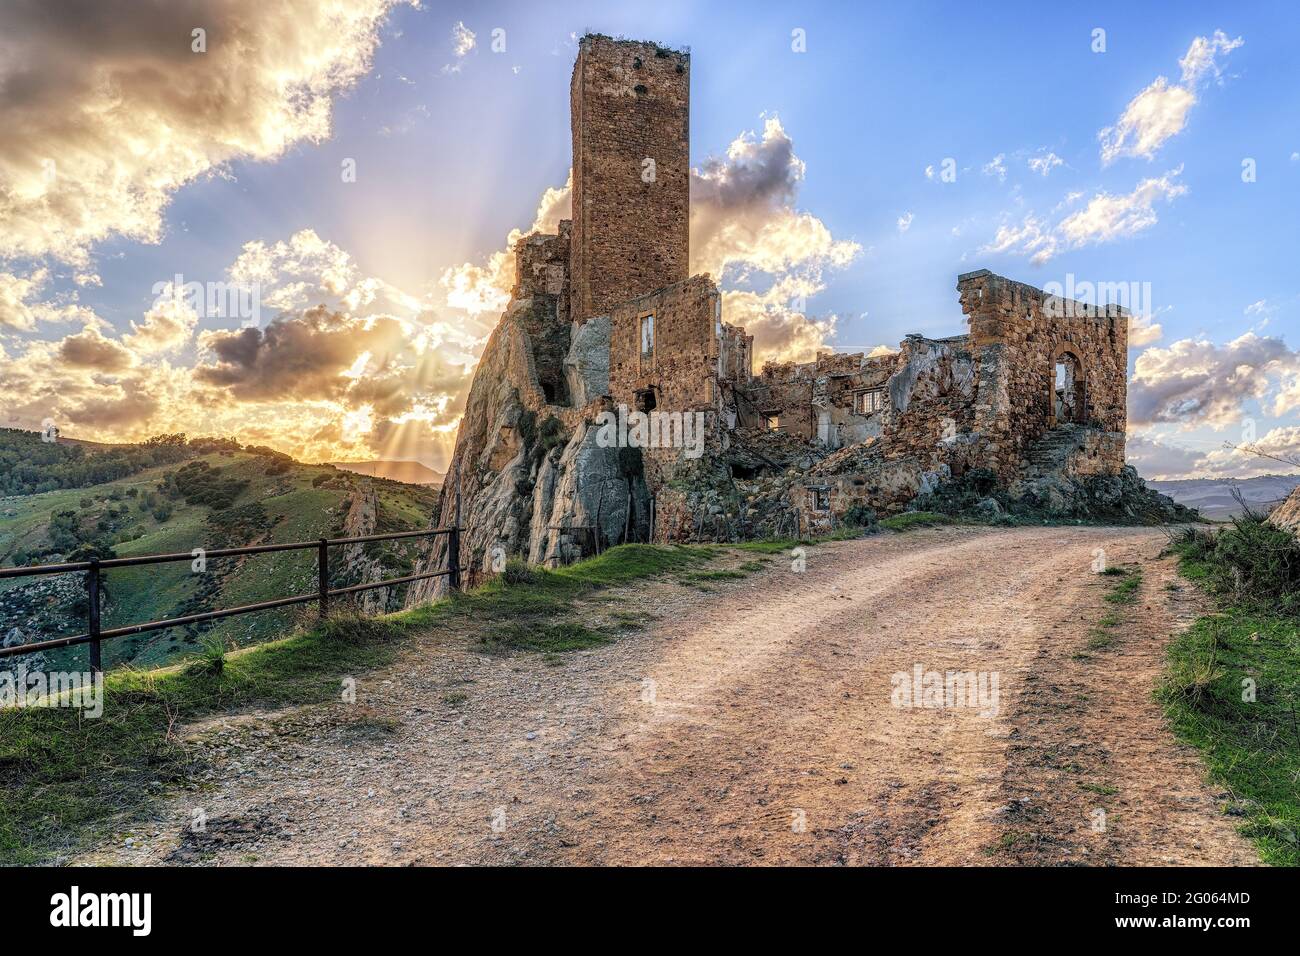 The Gresti or Pietratagliata castle, 14th century, is located in the territory of Aidone, precisely in the Gresti district, almost in the center of th Stock Photo